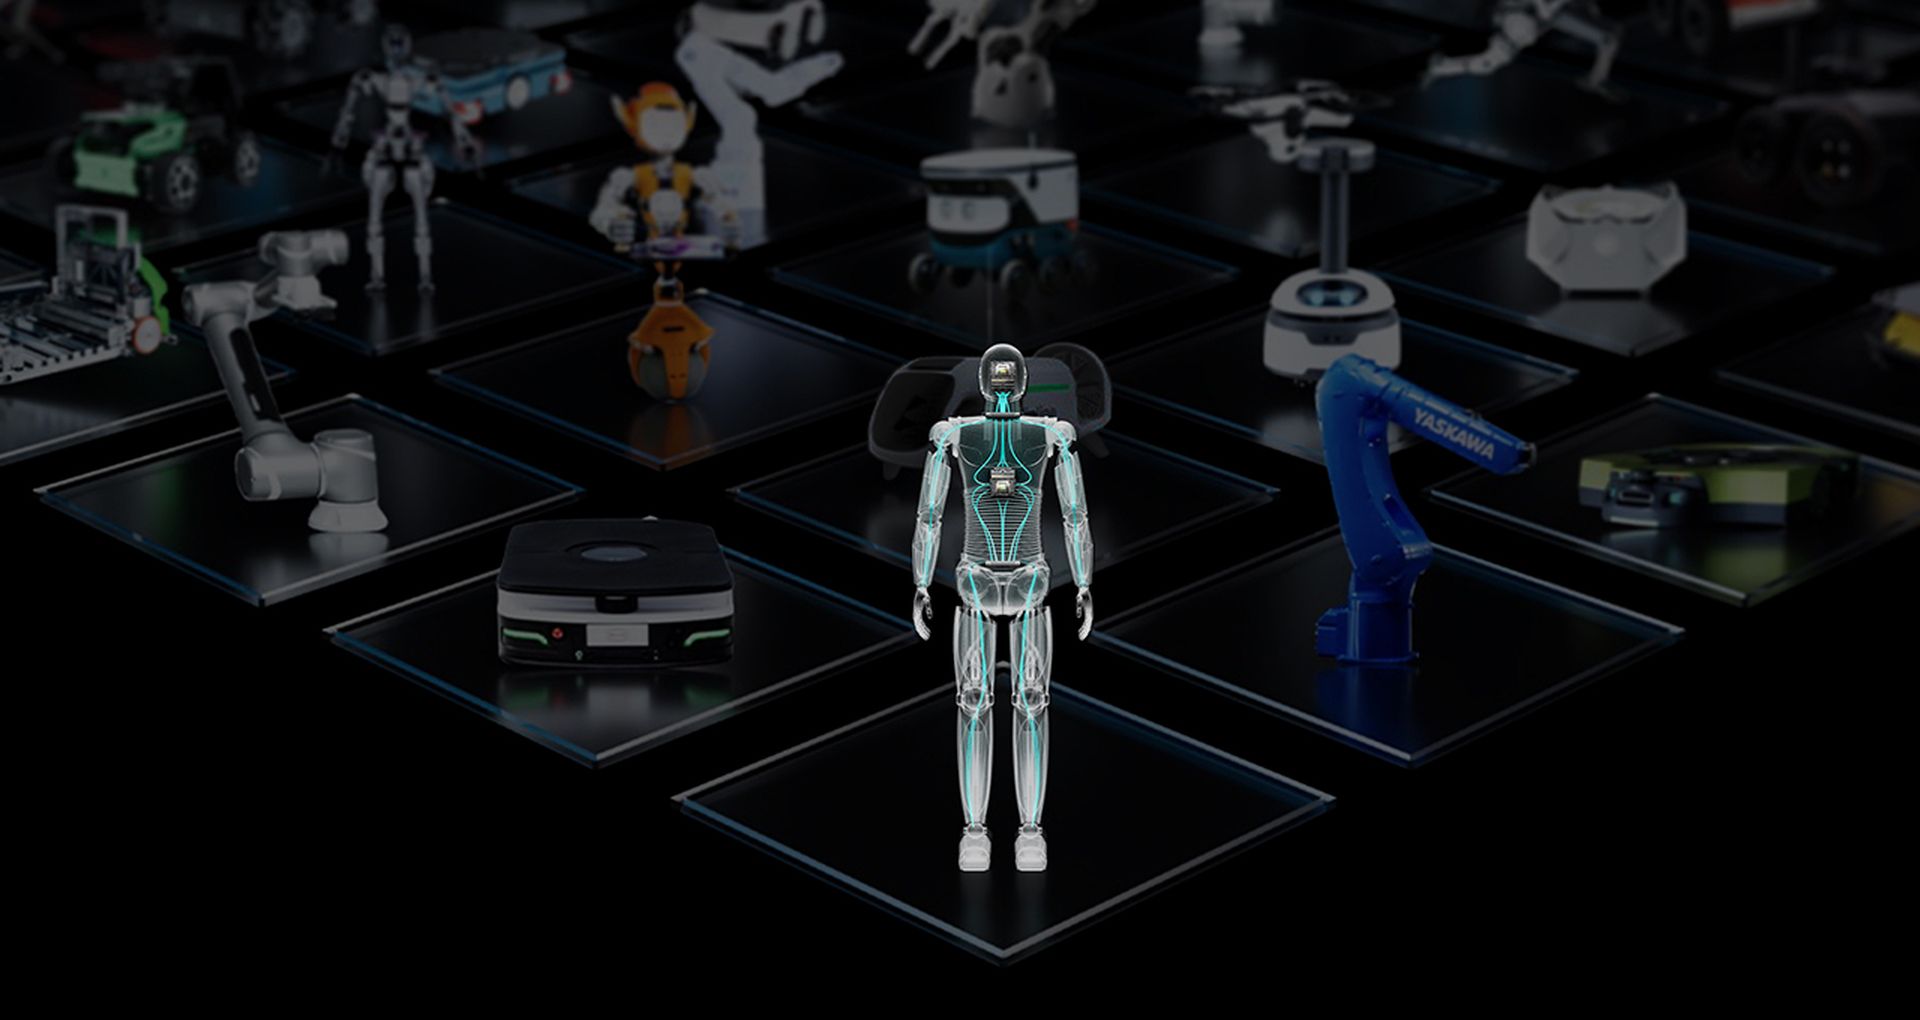  NVIDIA's latest AI platform unites top humanoid robotics firms